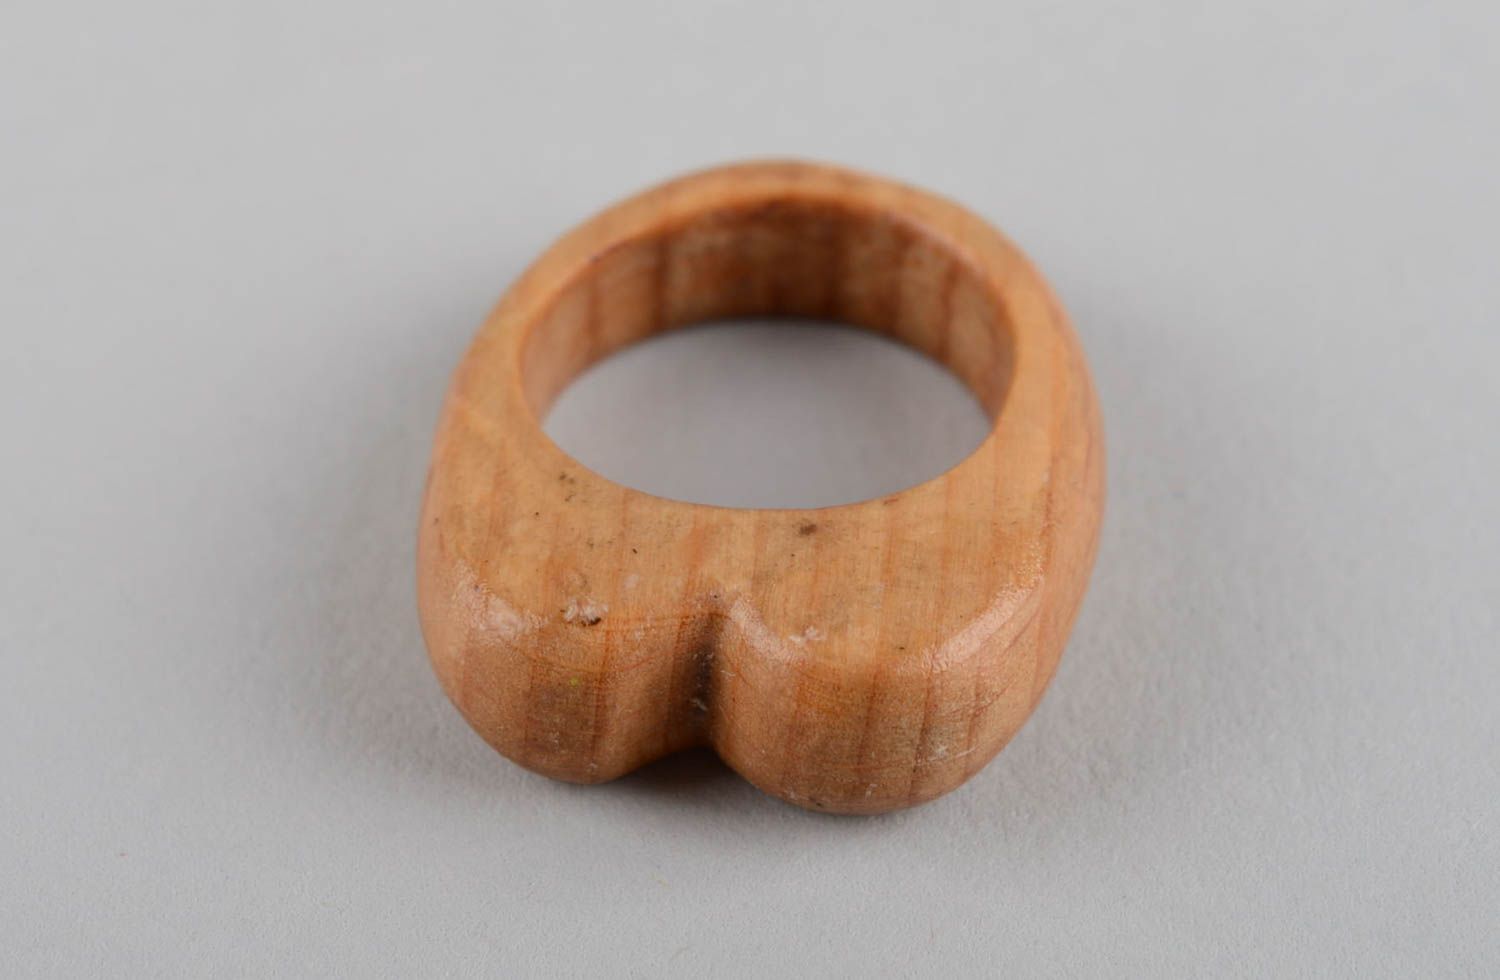 Cute handmade wooden ring wooden jewelry artisan jewelry designs wood craft photo 7